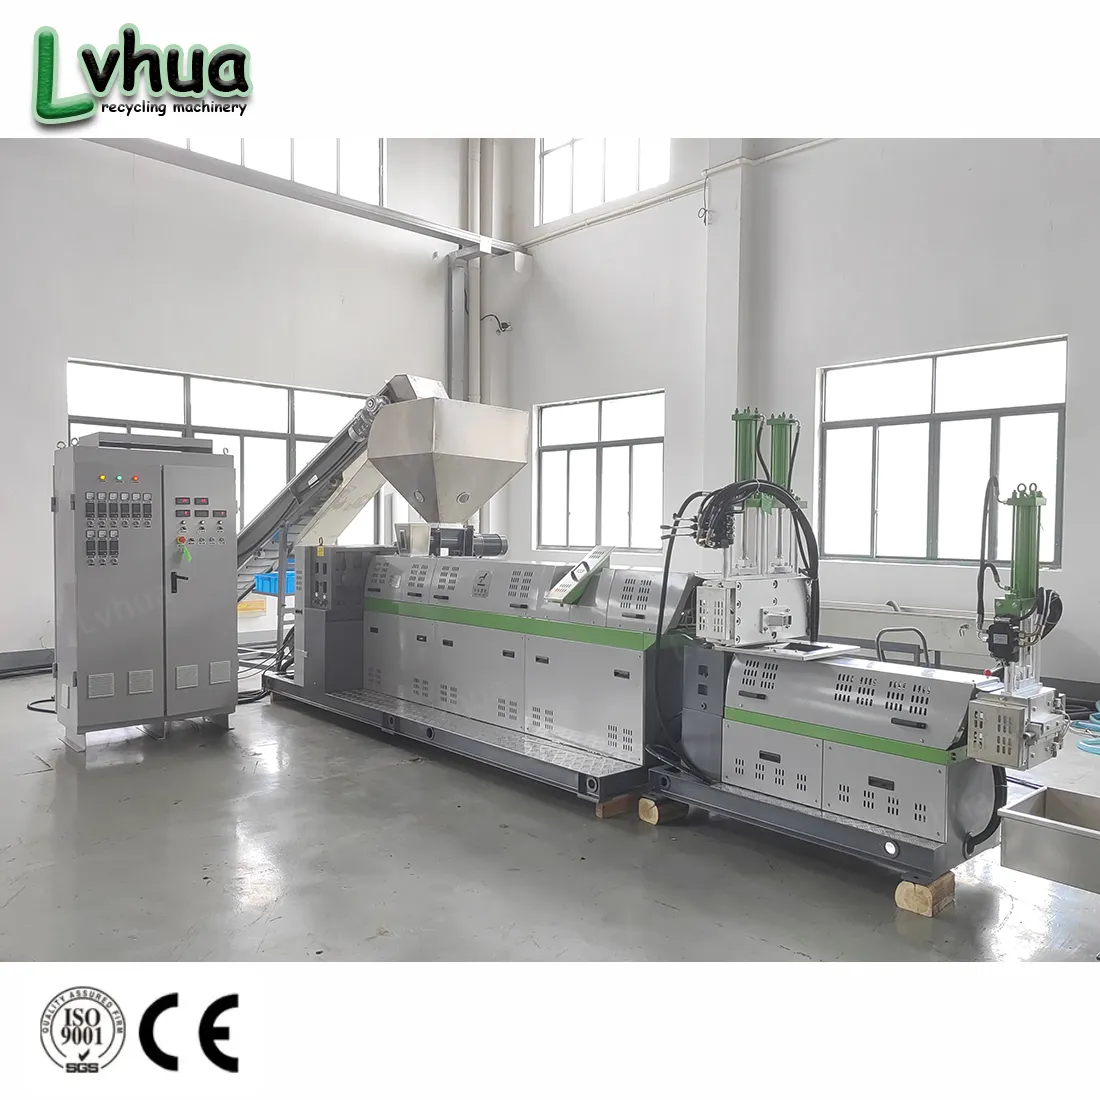 Lvhua 400 kg/h Voll automatische PP PE Flakes Kunststoff abfall recycling maschine Pellet izer kleiner Kunststoff granulator